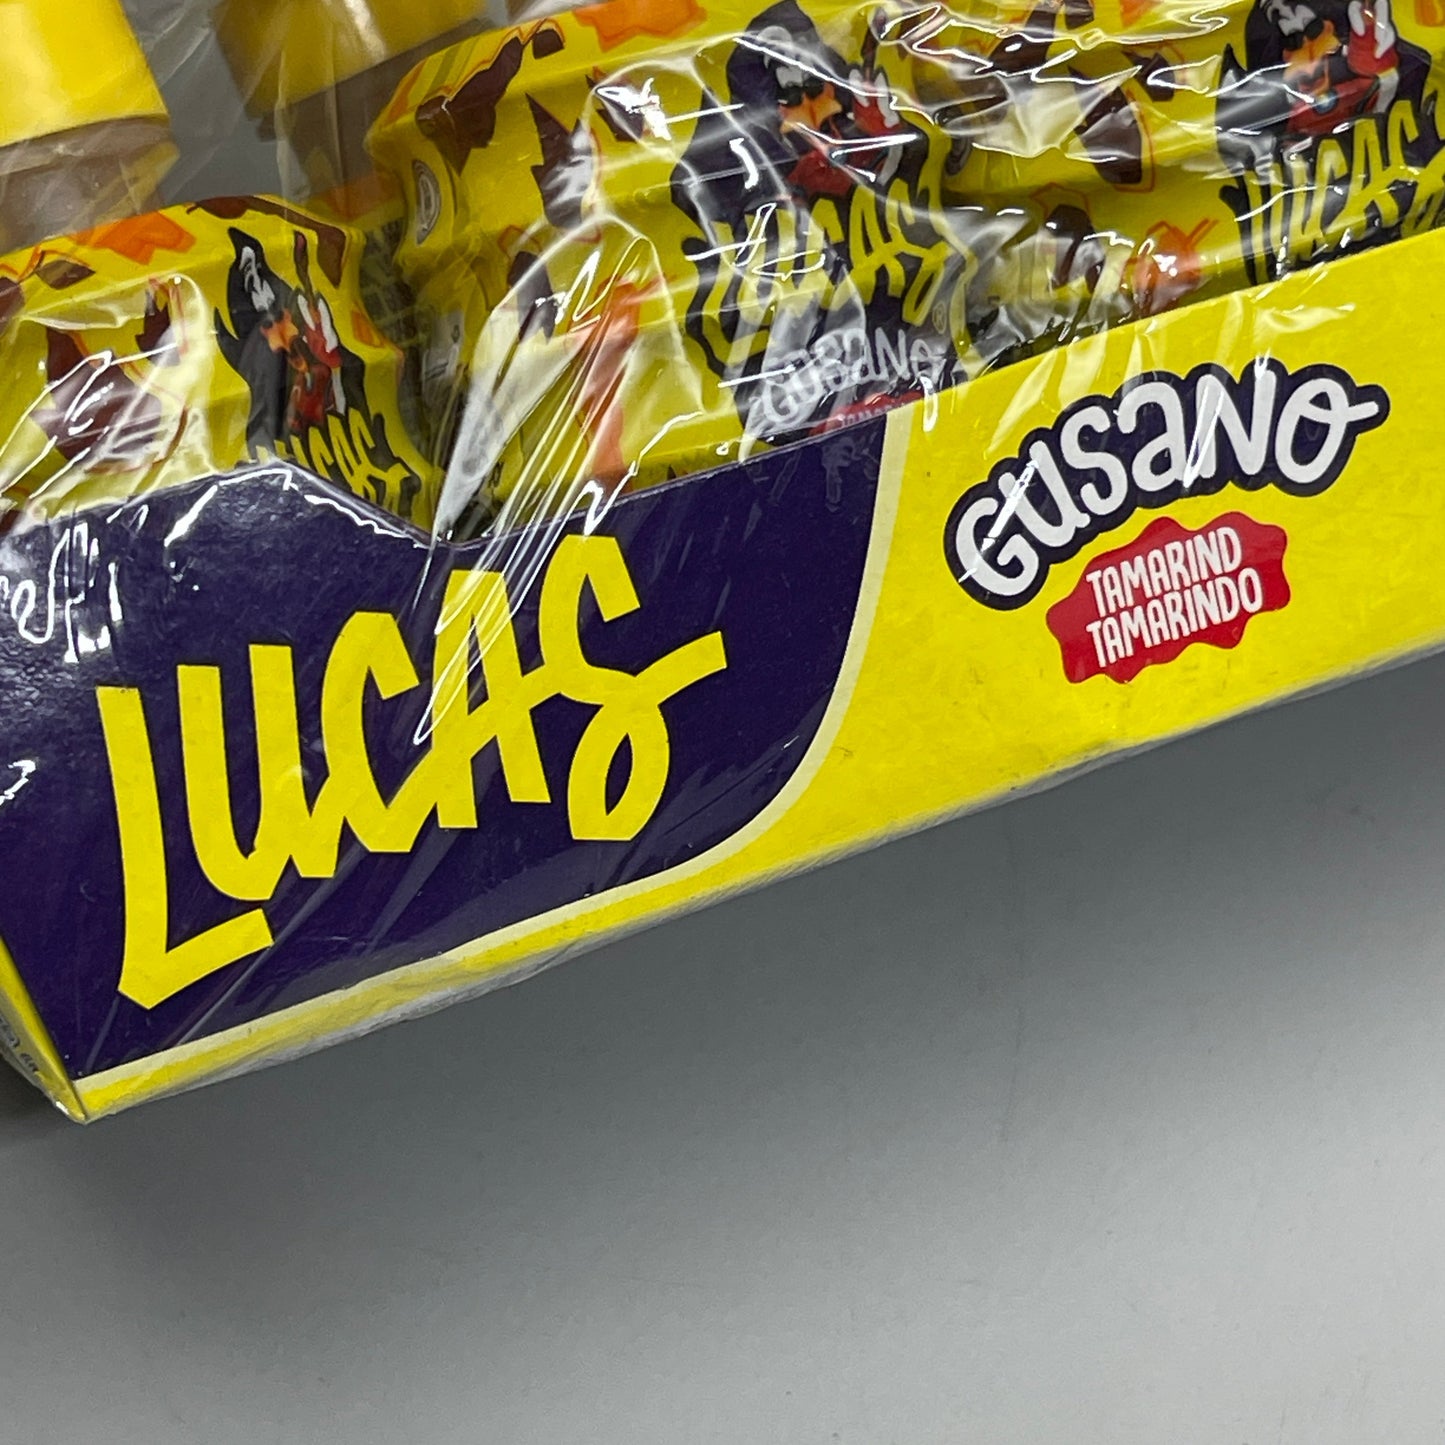 ZA@ 10-PACK! LUCAS Gusano Tamarind Hot Liquid Candy 1.26 oz (New) B